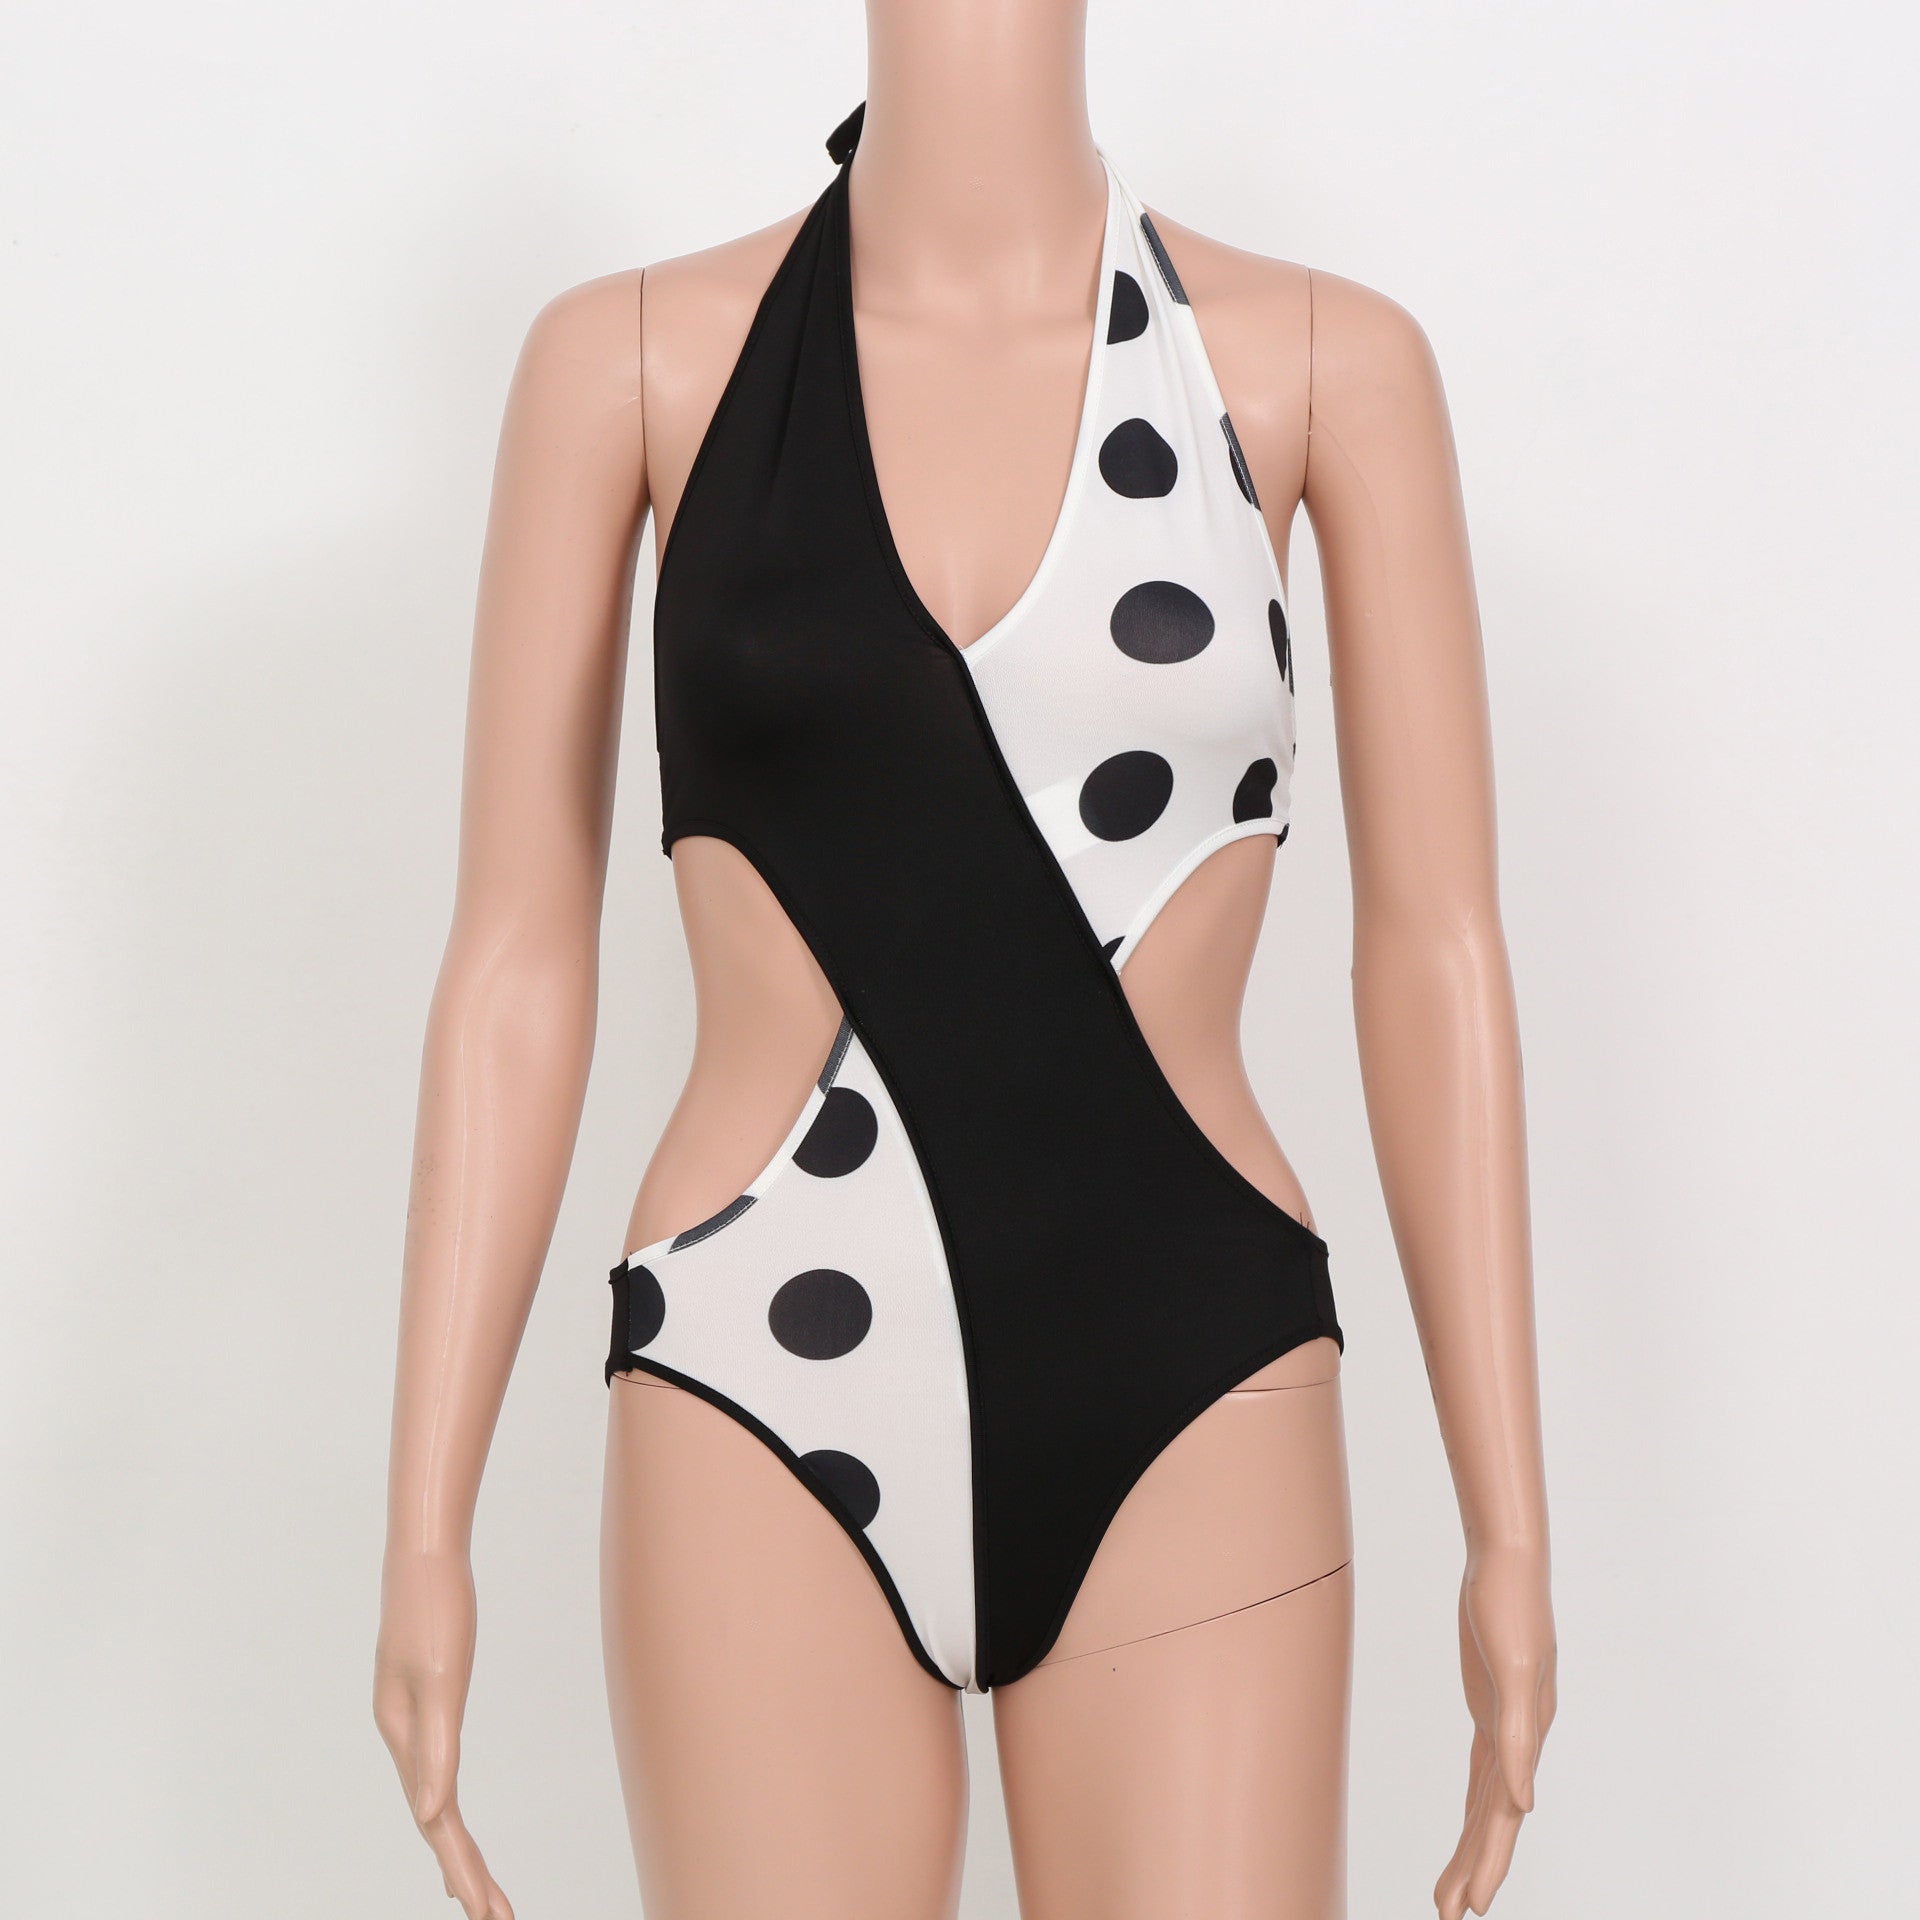 Plus Size Polka Dot Cut Out One Piece Swimwear Monokini - Meet Yours Fashion - 3